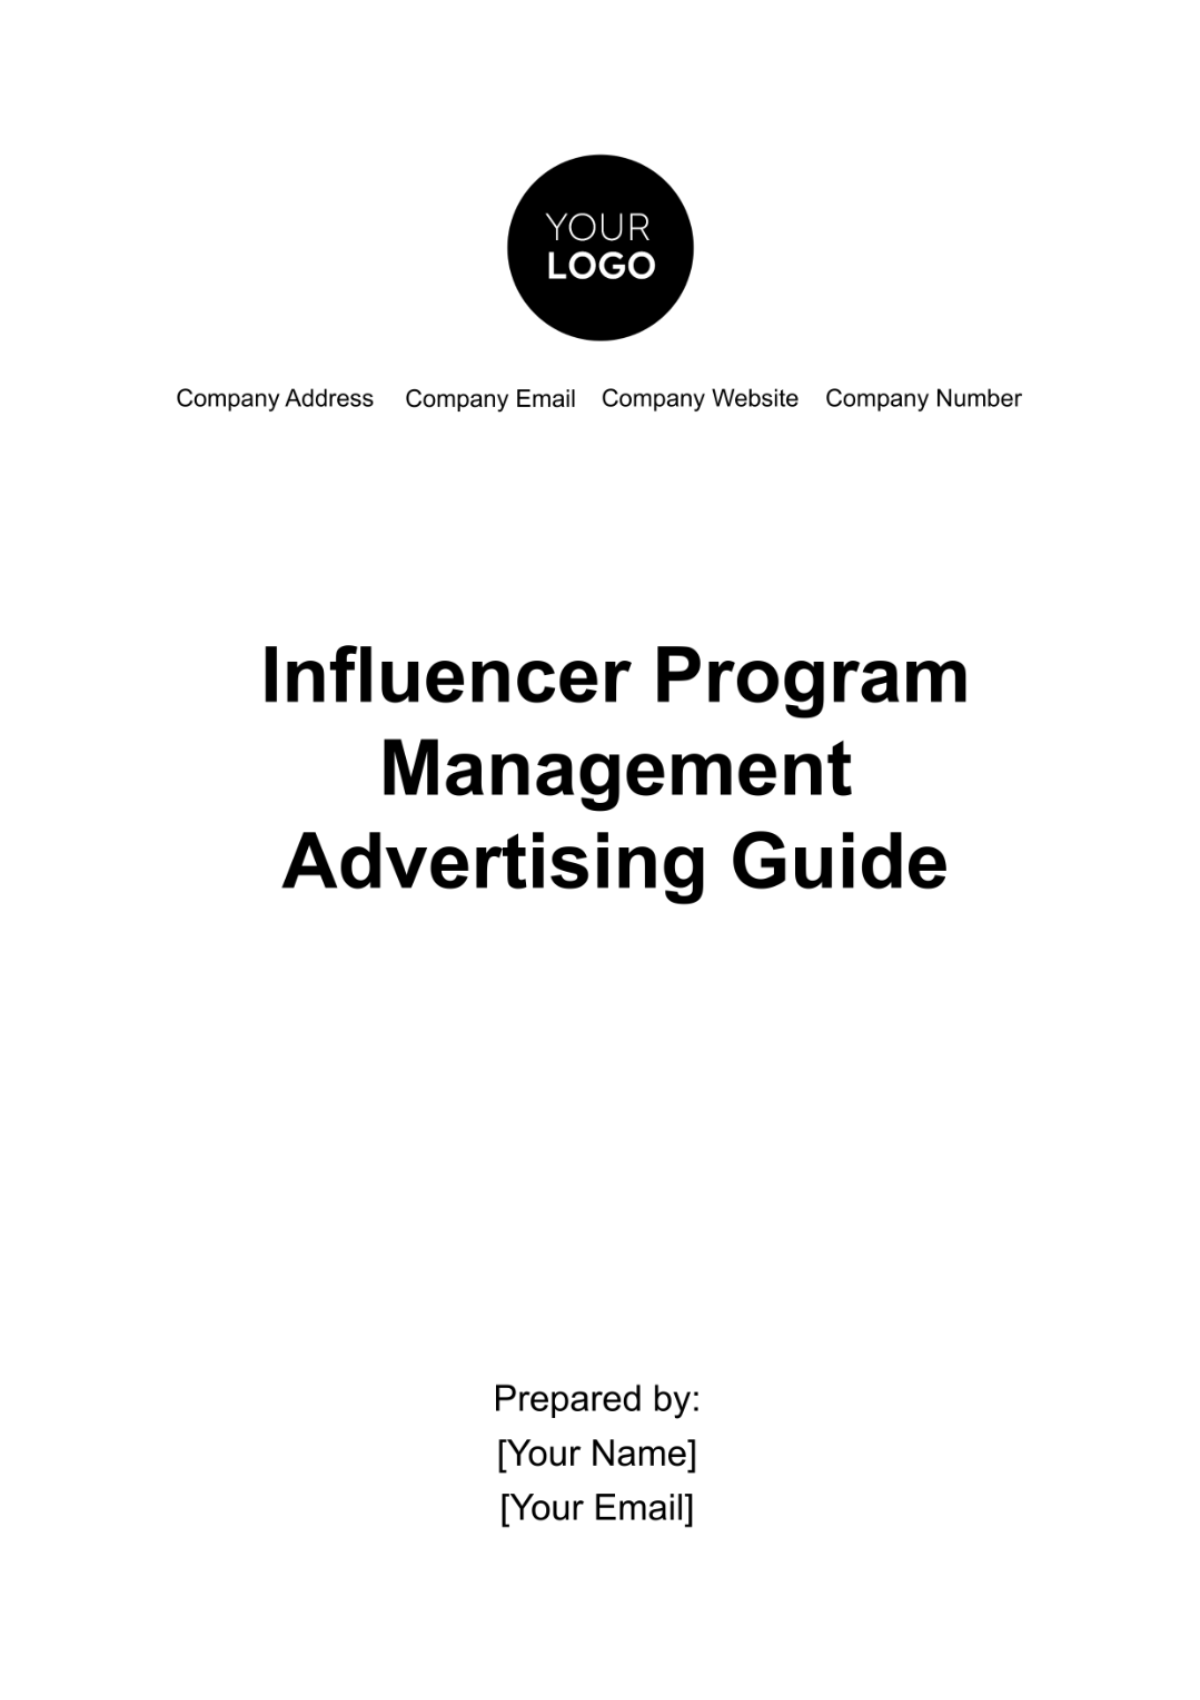 Influencer Program Management Advertising Guide Template